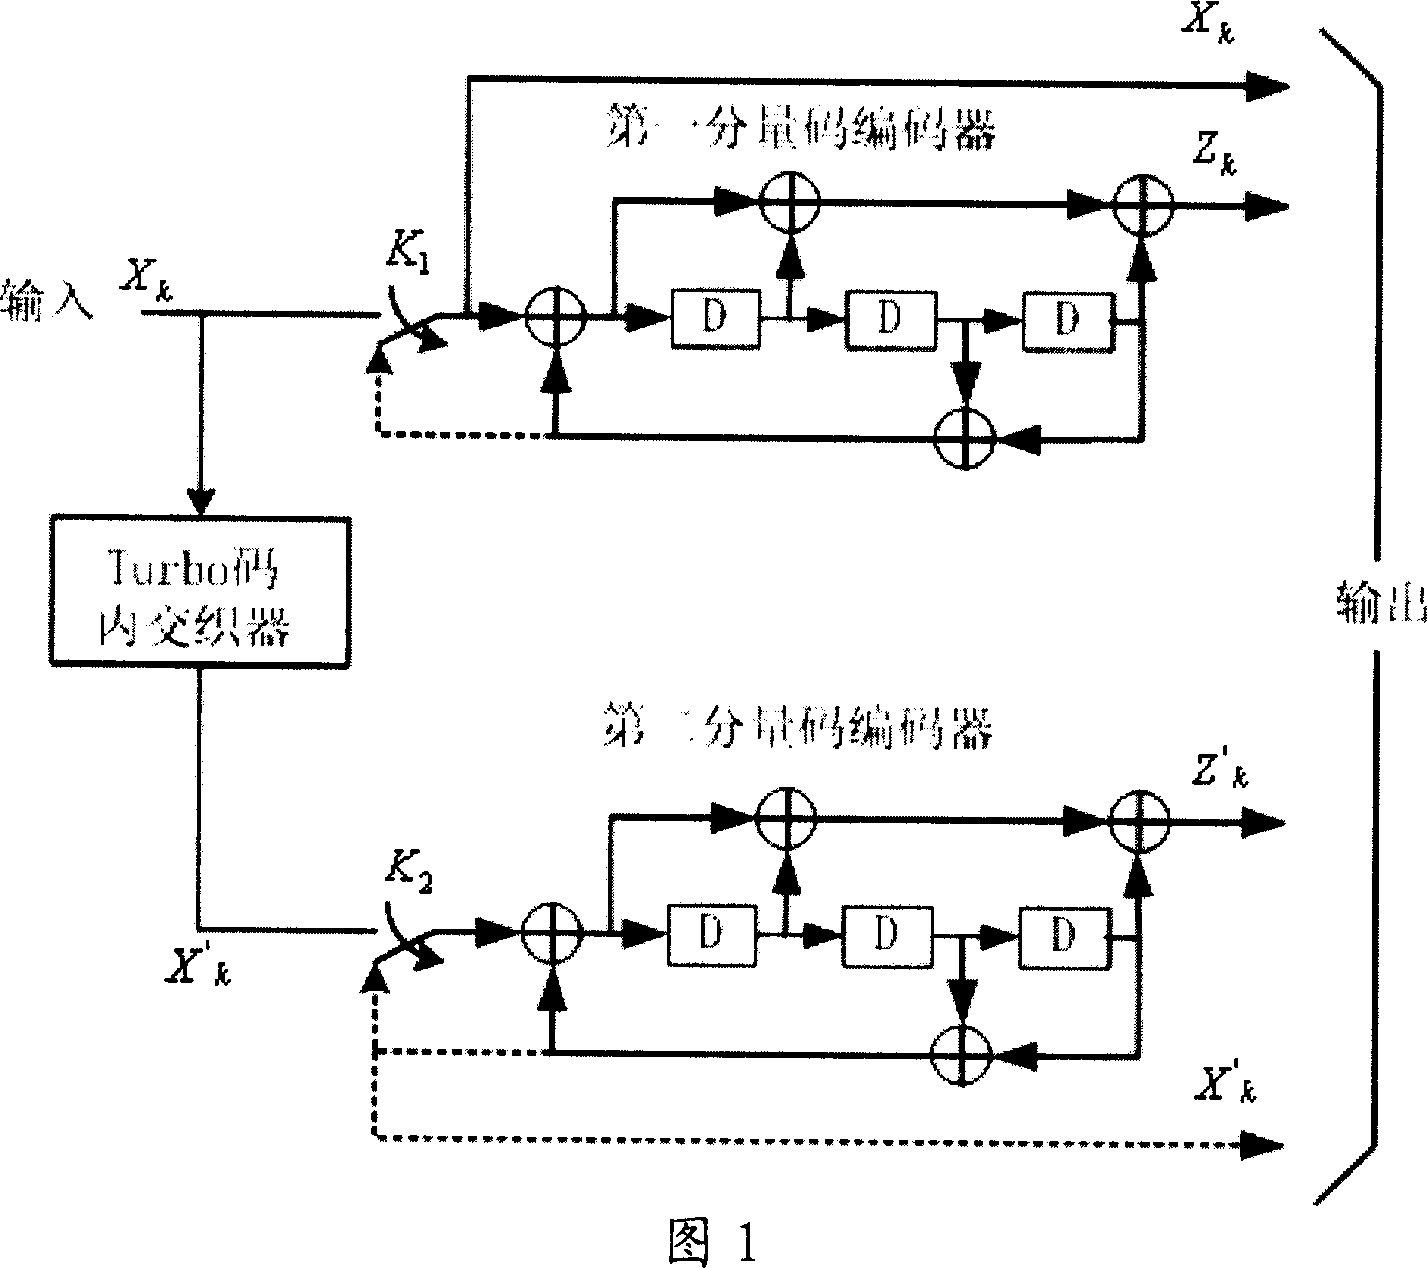 A Turbo code transmission block segmenting method